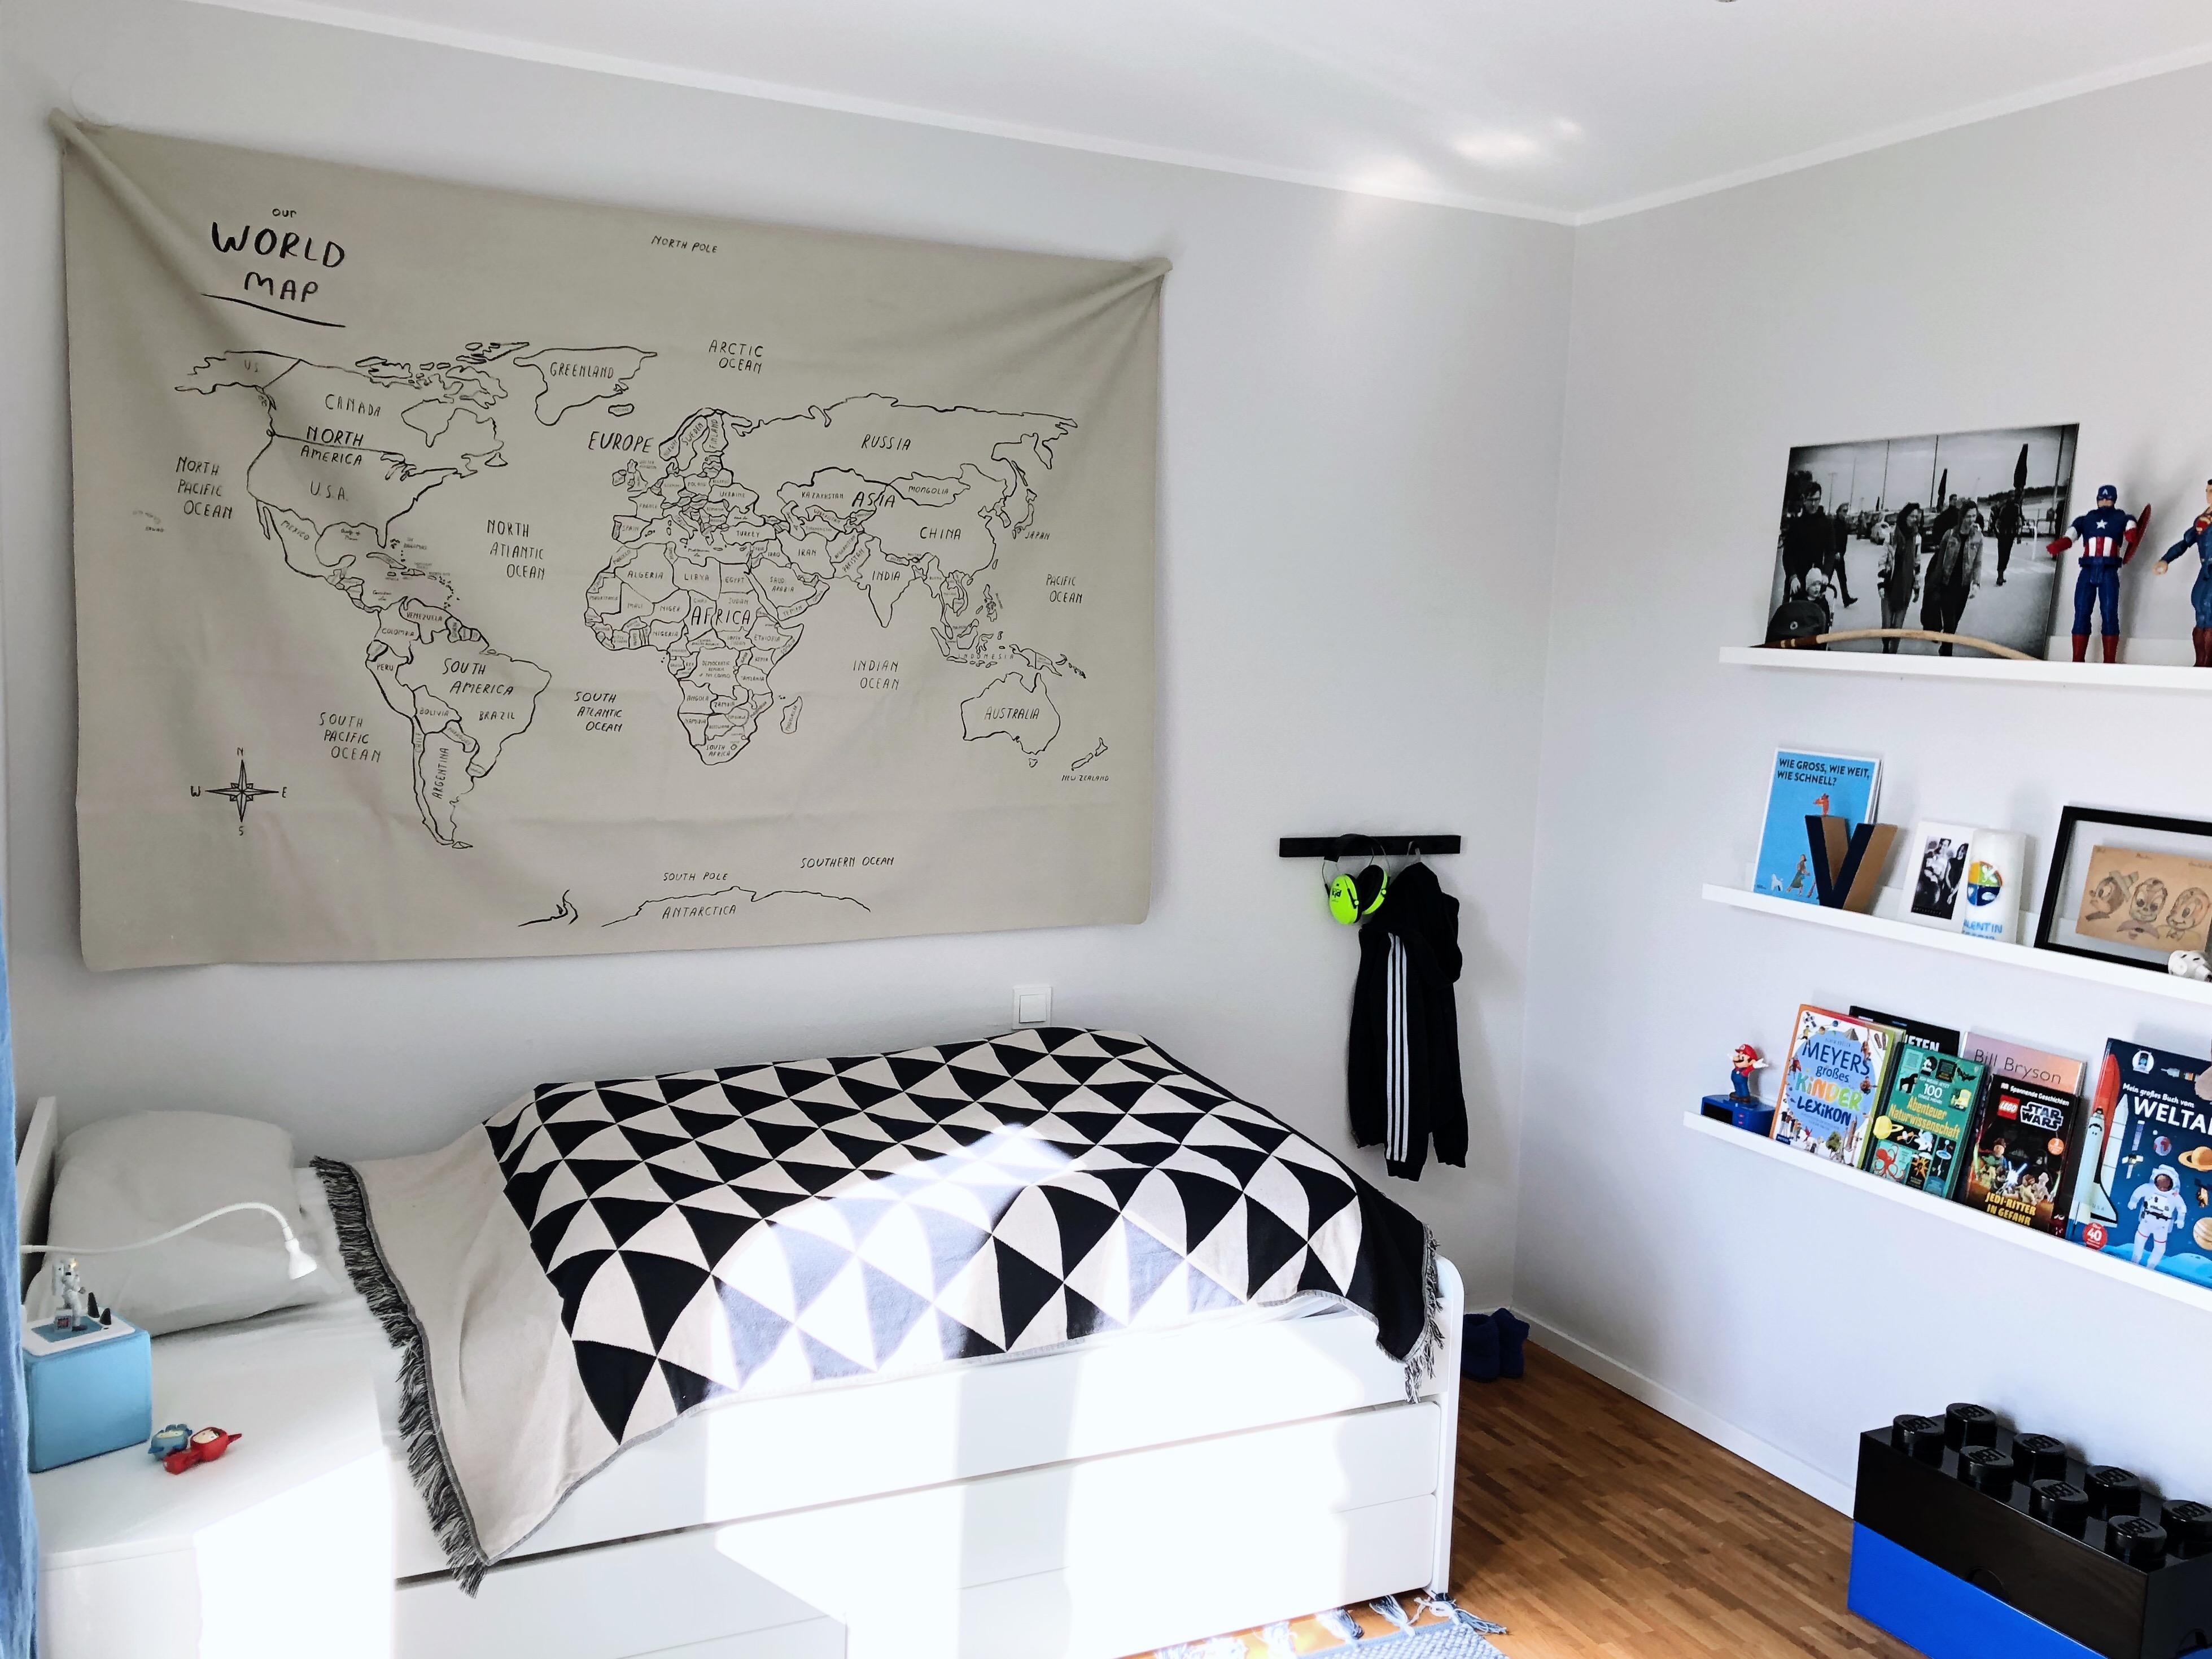 #Weltkarte #Kinderzimmer #Jungszimmer #Wandgestaltung #ikea #couchliebt #Tagesdecke